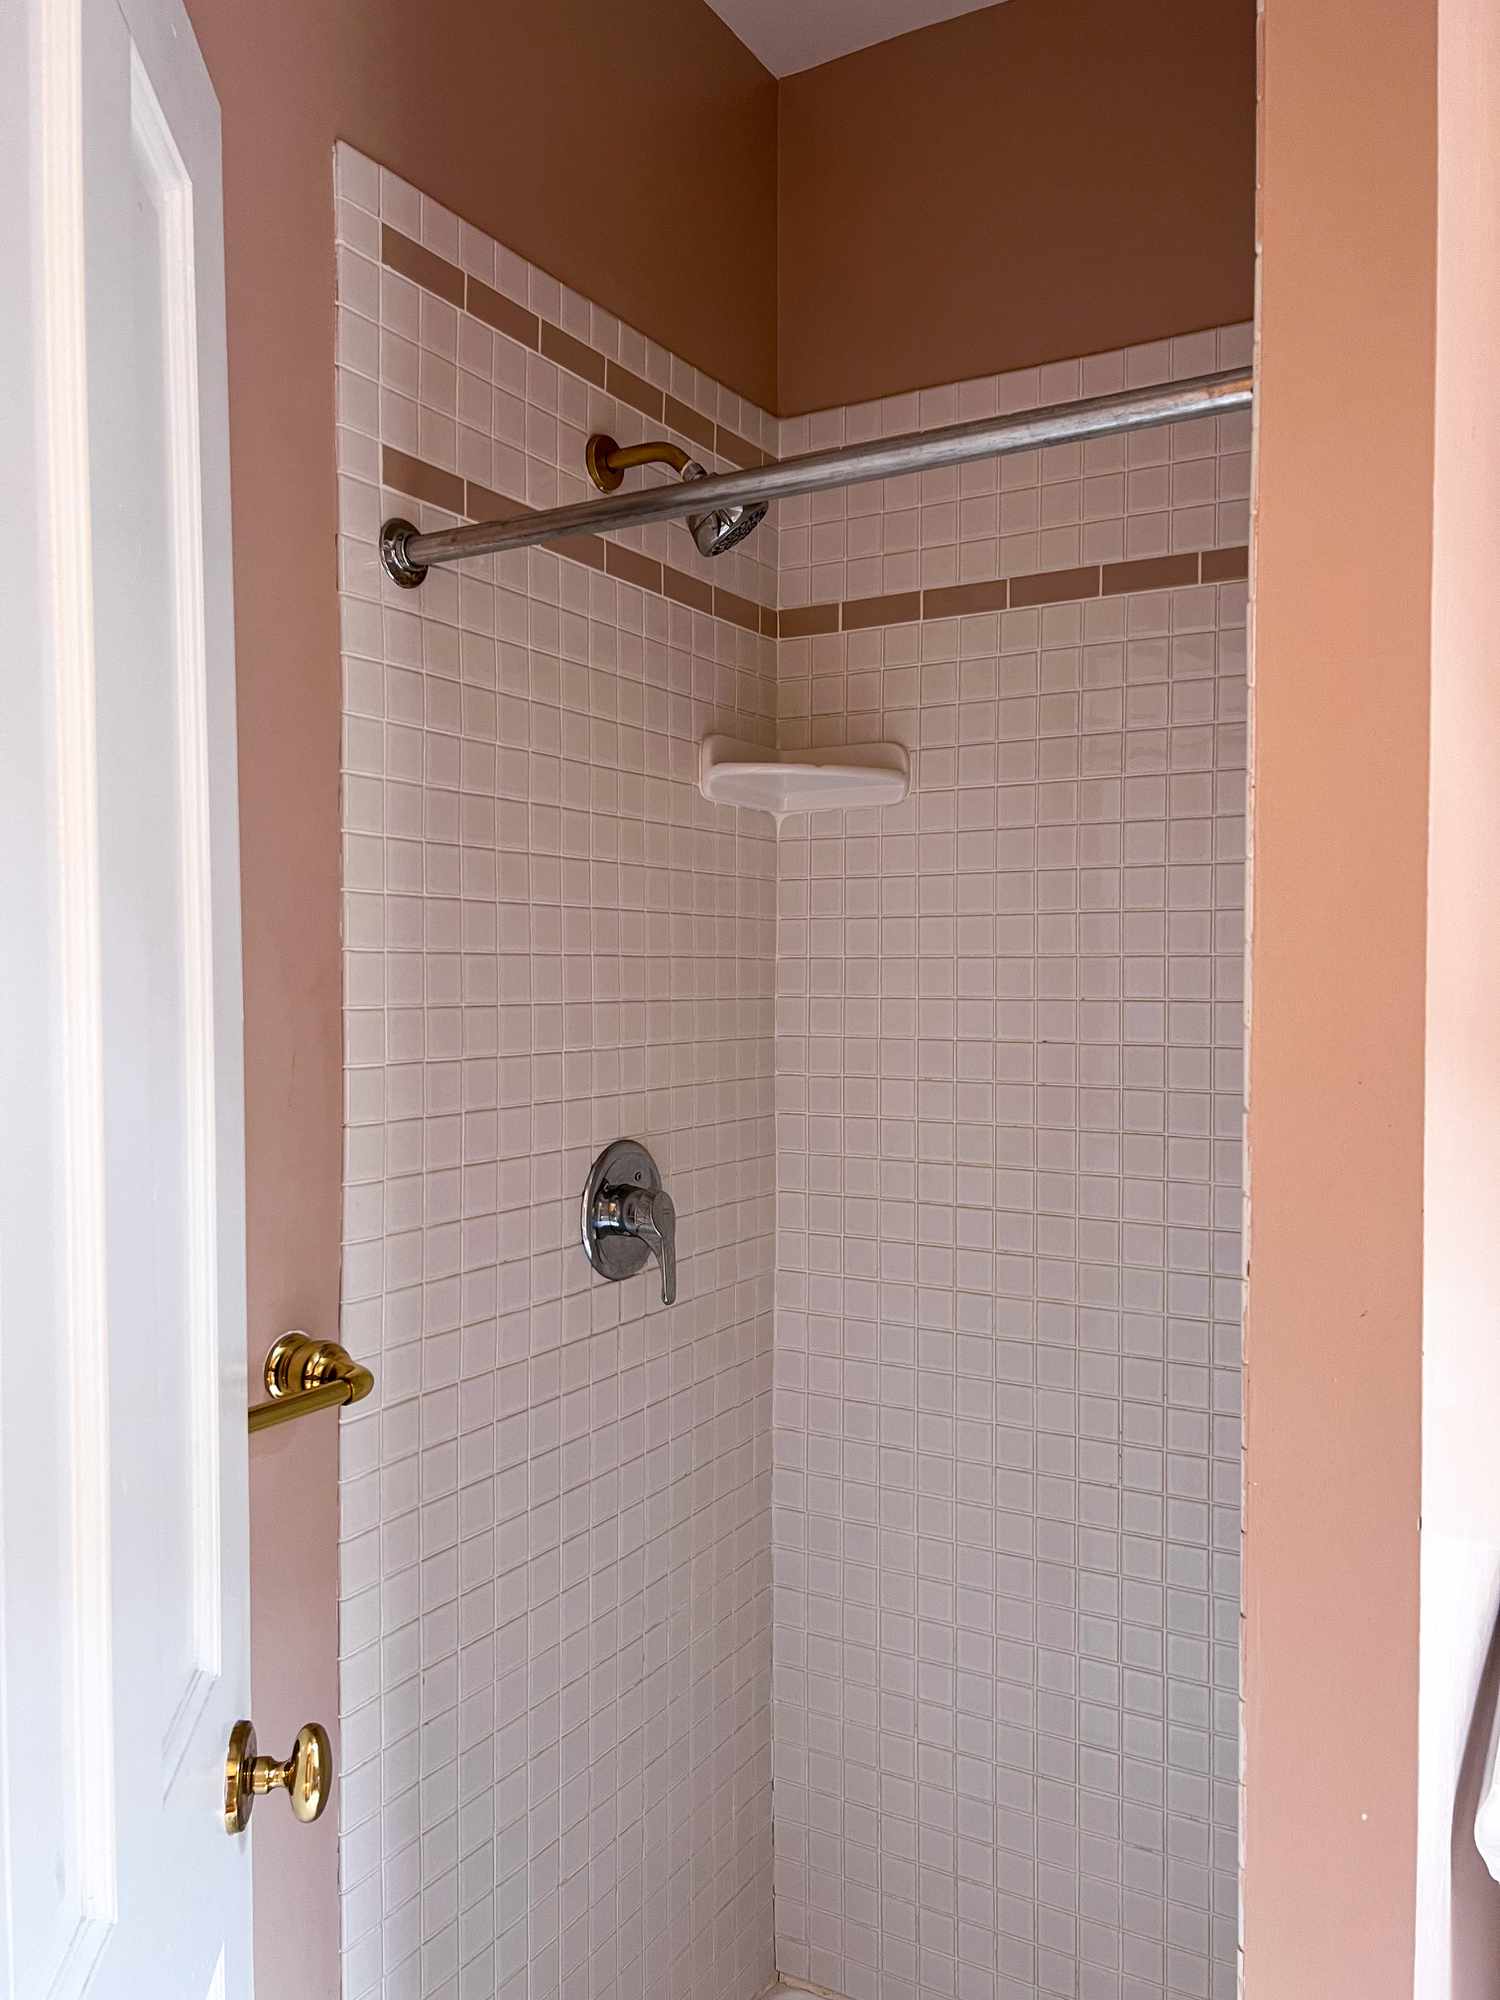 Salle de bain rose avec carrelage mauve